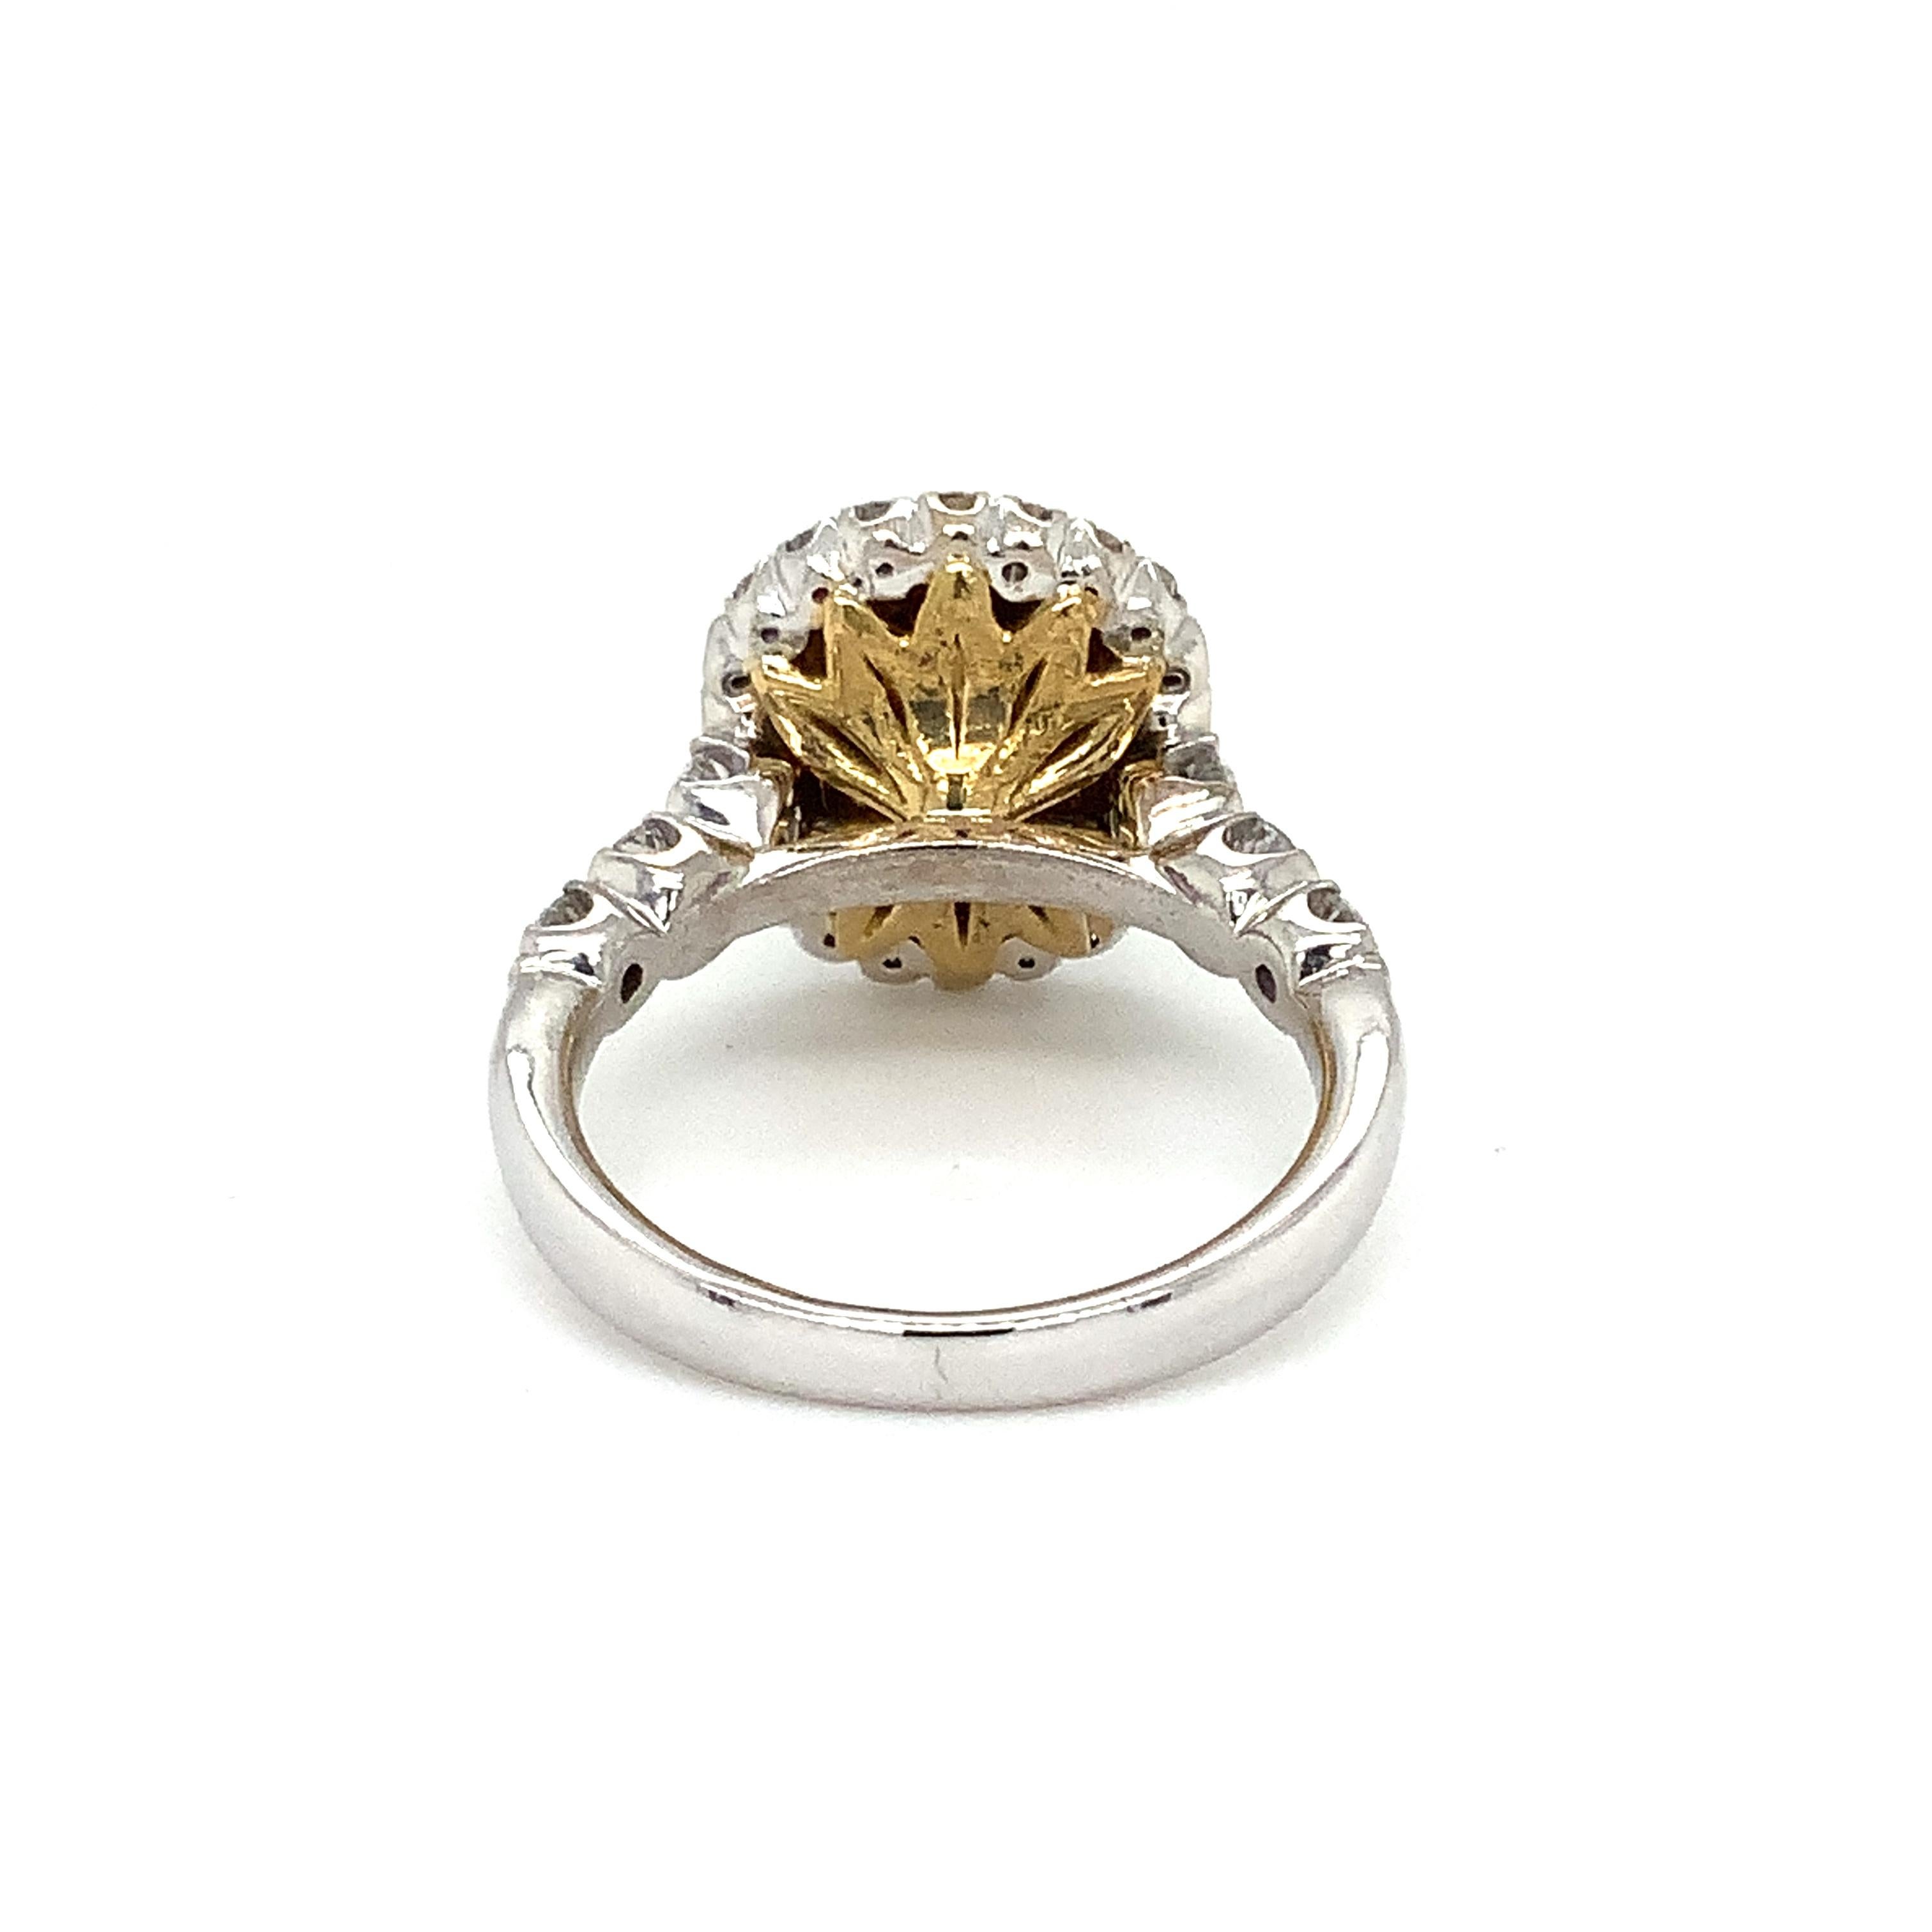 Christopher Designs L'Amour Crisscut Light Fancy Yellow Diamond Ring Set in 18K For Sale 1